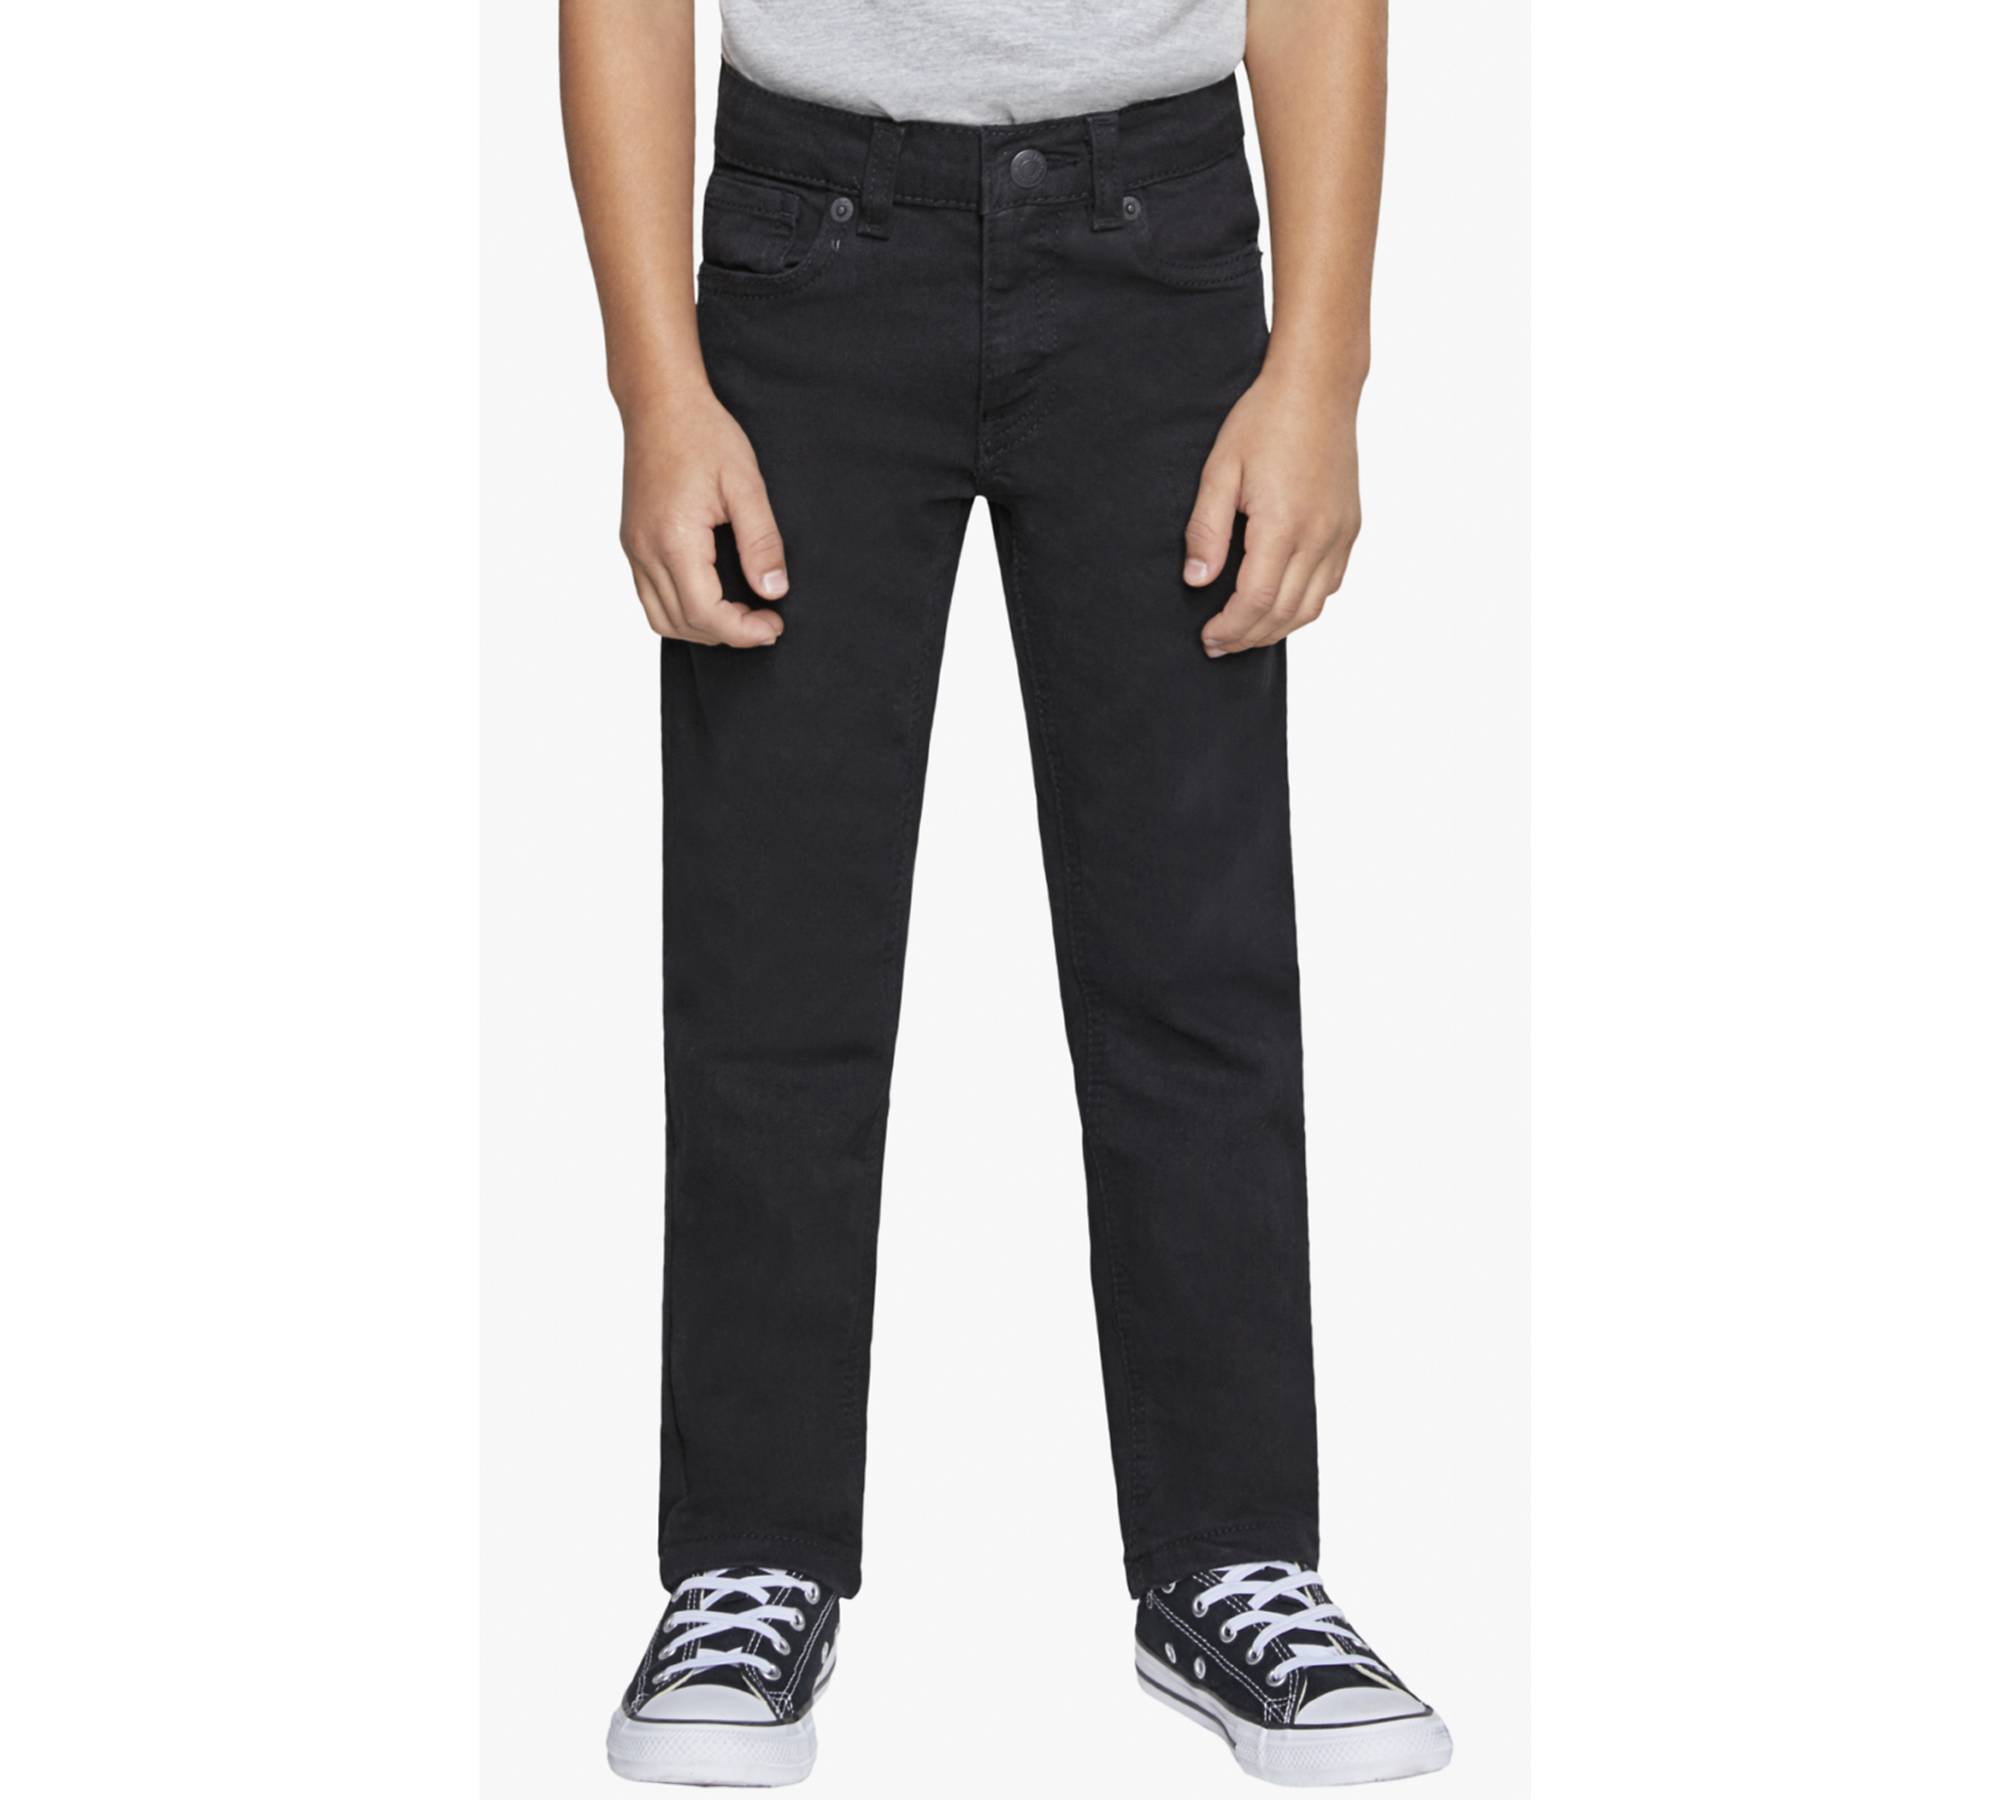 511™ Slim Fit Little Boys Jeans 4-7x 1